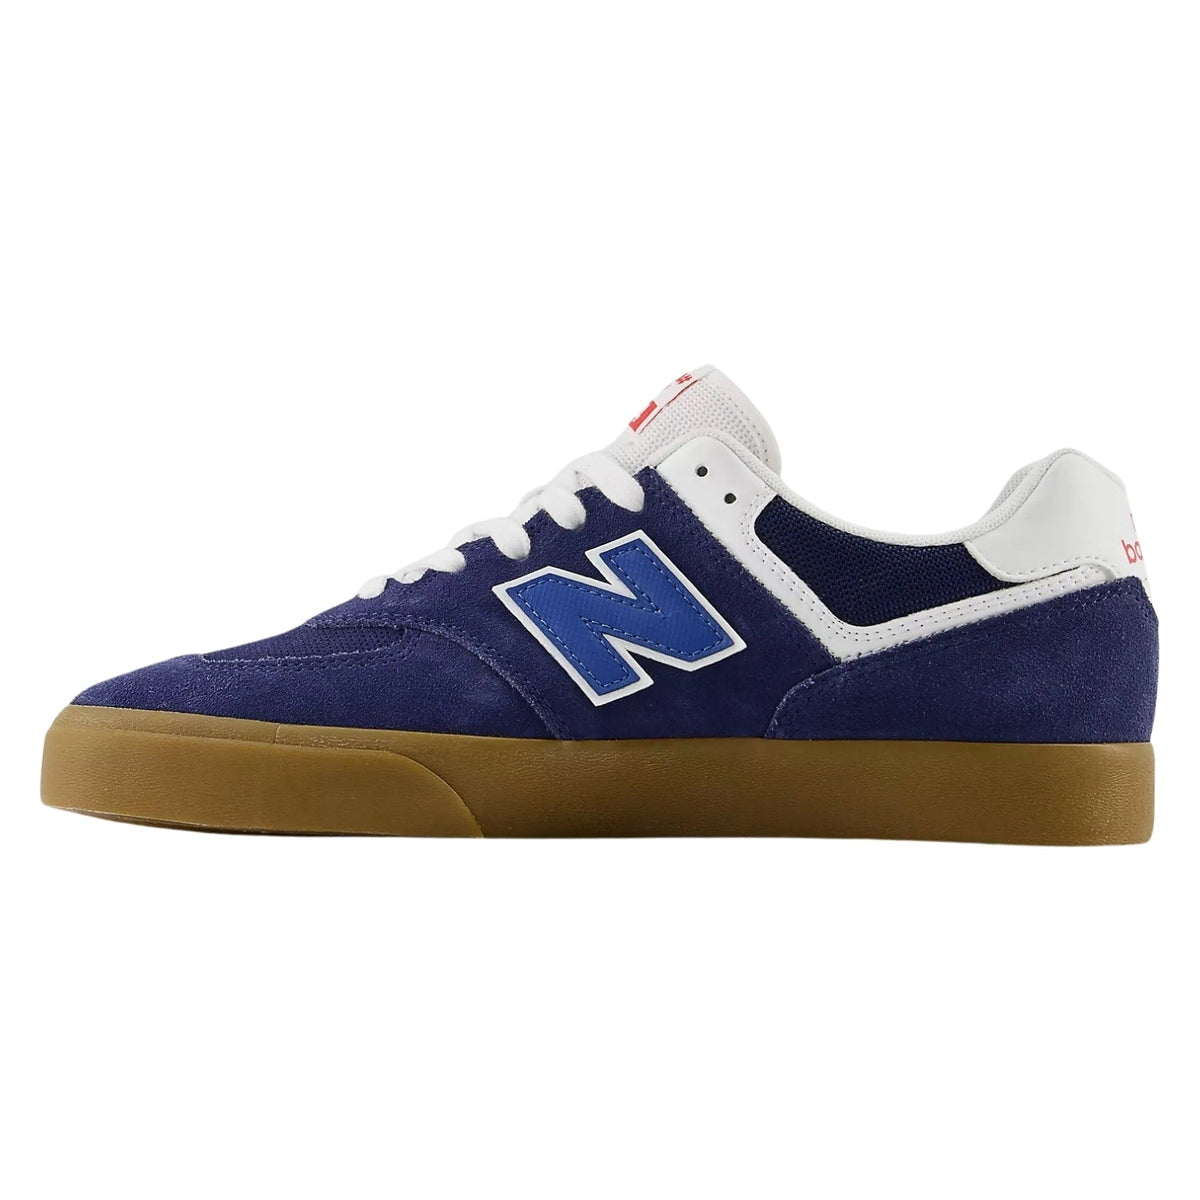 New Balance Numeric Nm574 Skate Shoes - Navy/White - Mens Skate Shoes by New Balance Numeric